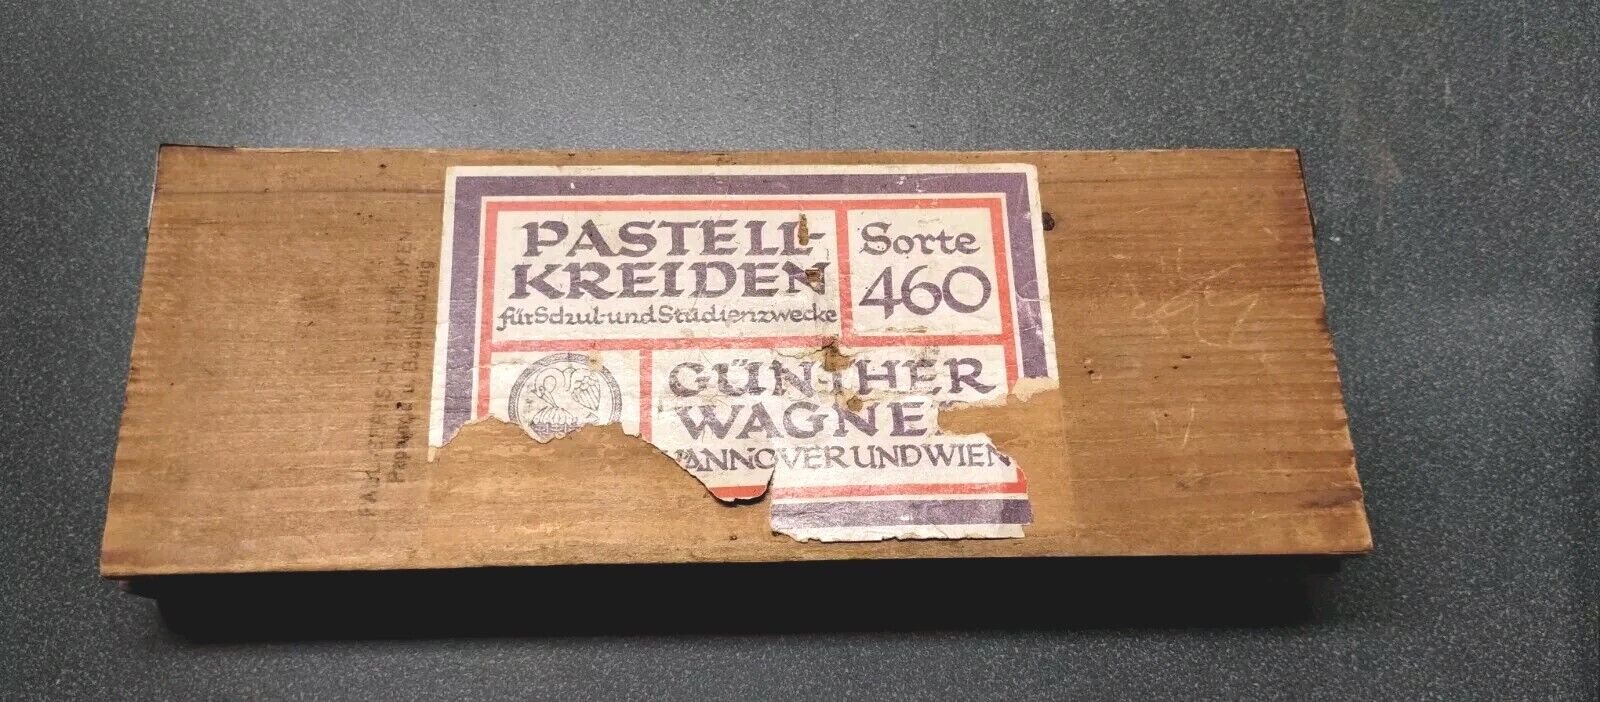 Günther Wagner Pastellkreiden Sorte 460/24  Vintage Pastel Crayons, Germany